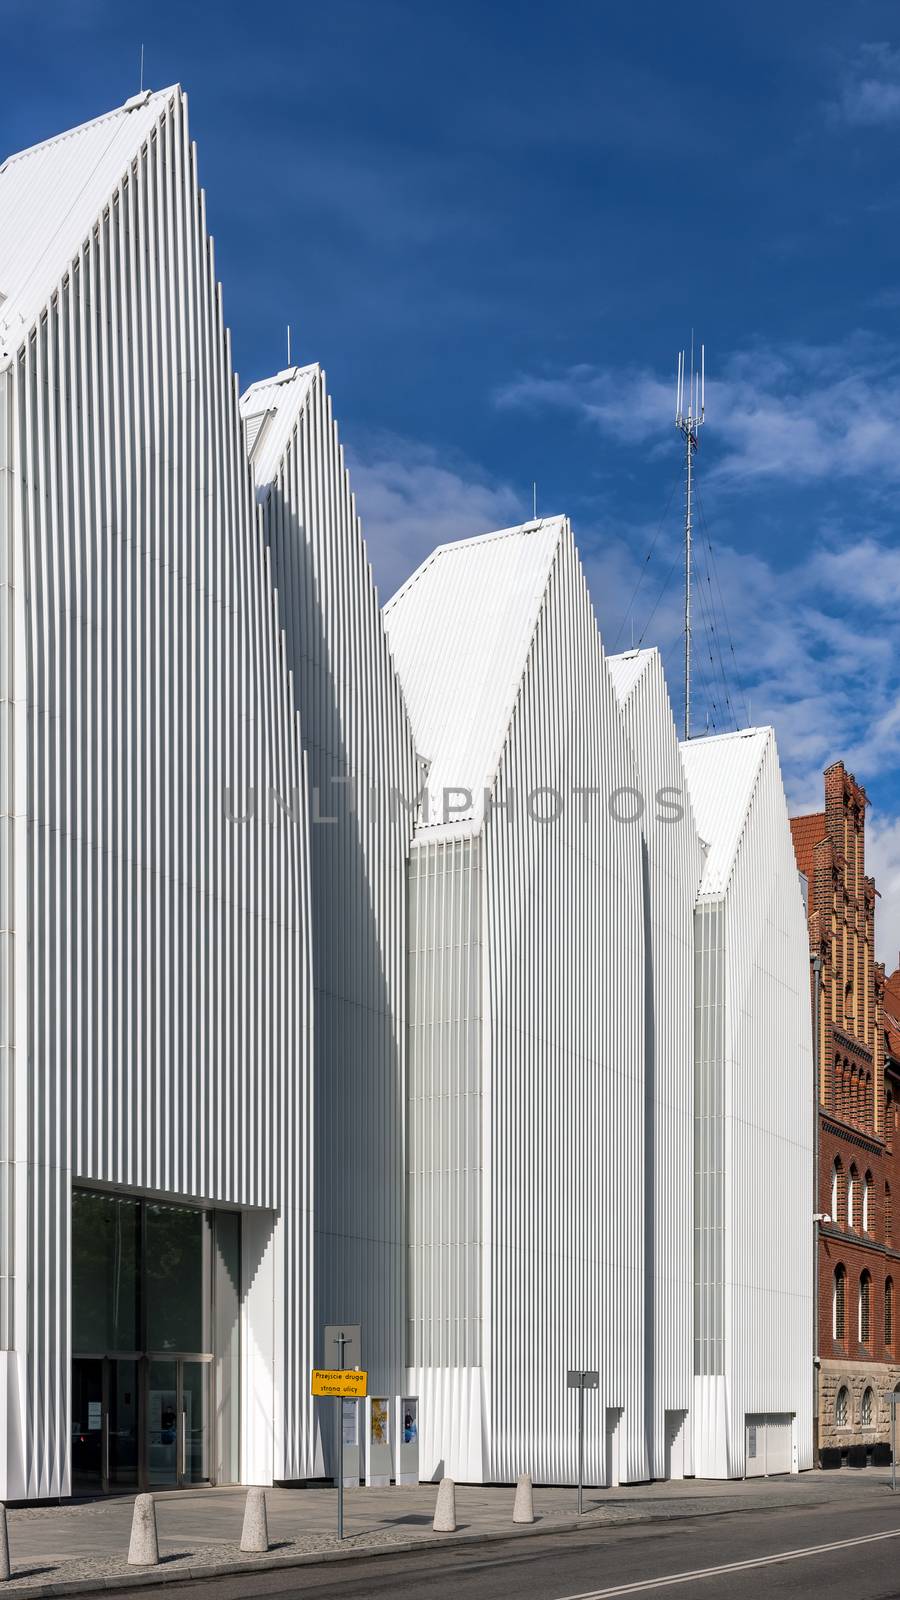 Facade of  The Szczecin Philharmonic Hall designed by Estudio Barozzi Veiga. Original building won the EU's architecture prize, the Mies van der Rohe Award 2015.